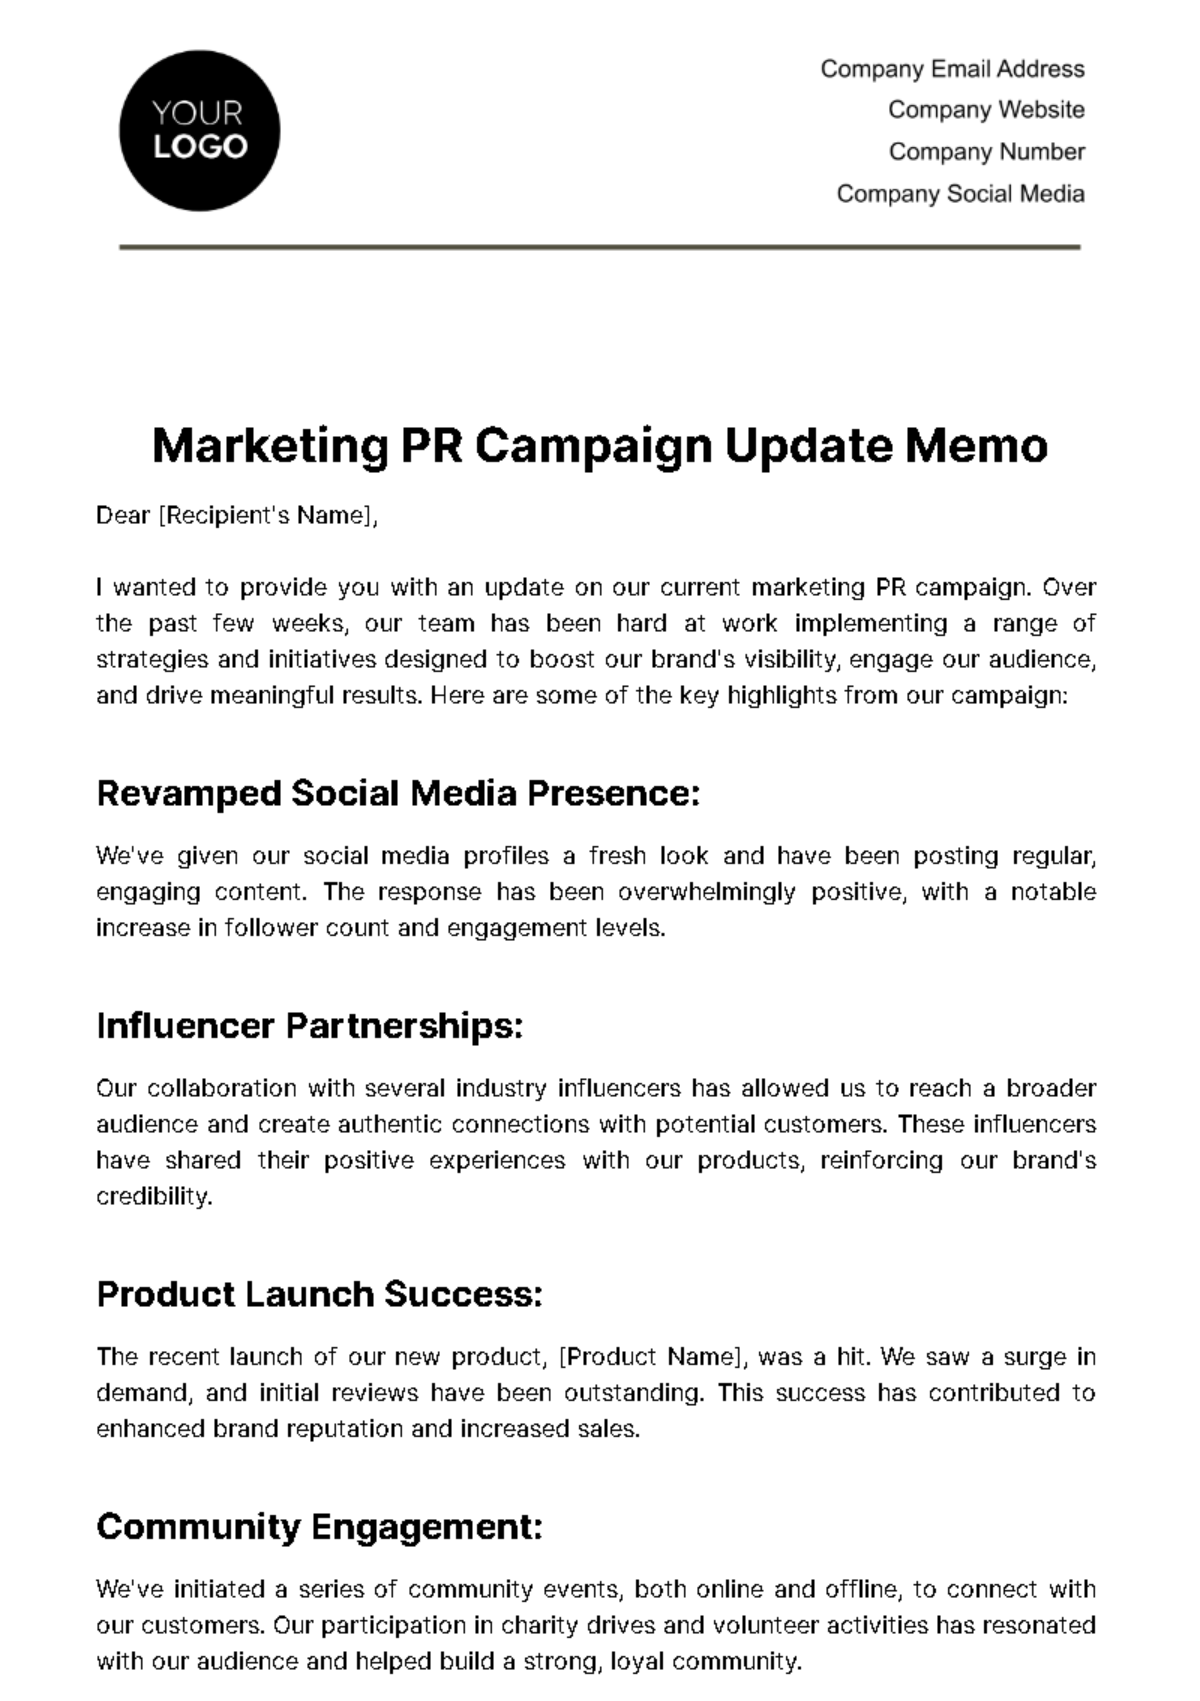 Marketing PR Campaign Update Memo Template